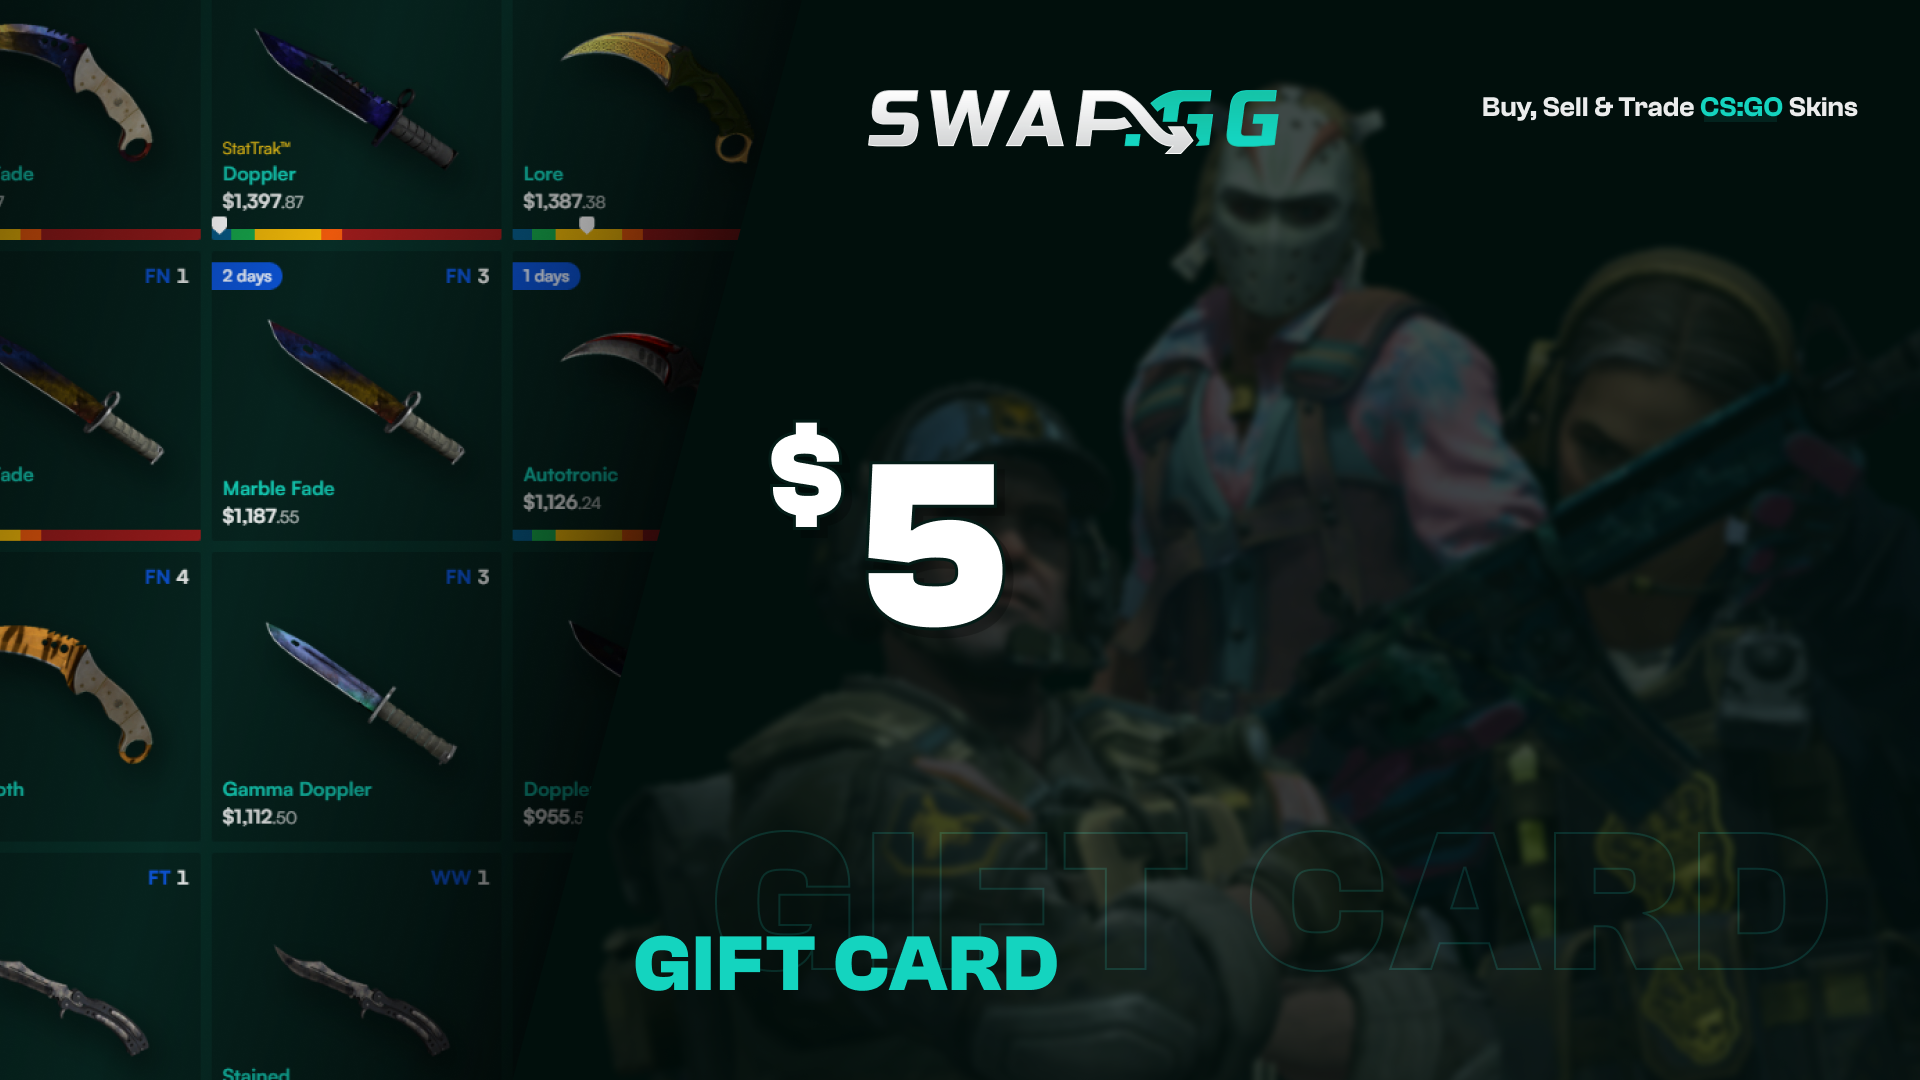 Swap.gg $5 Gift Card